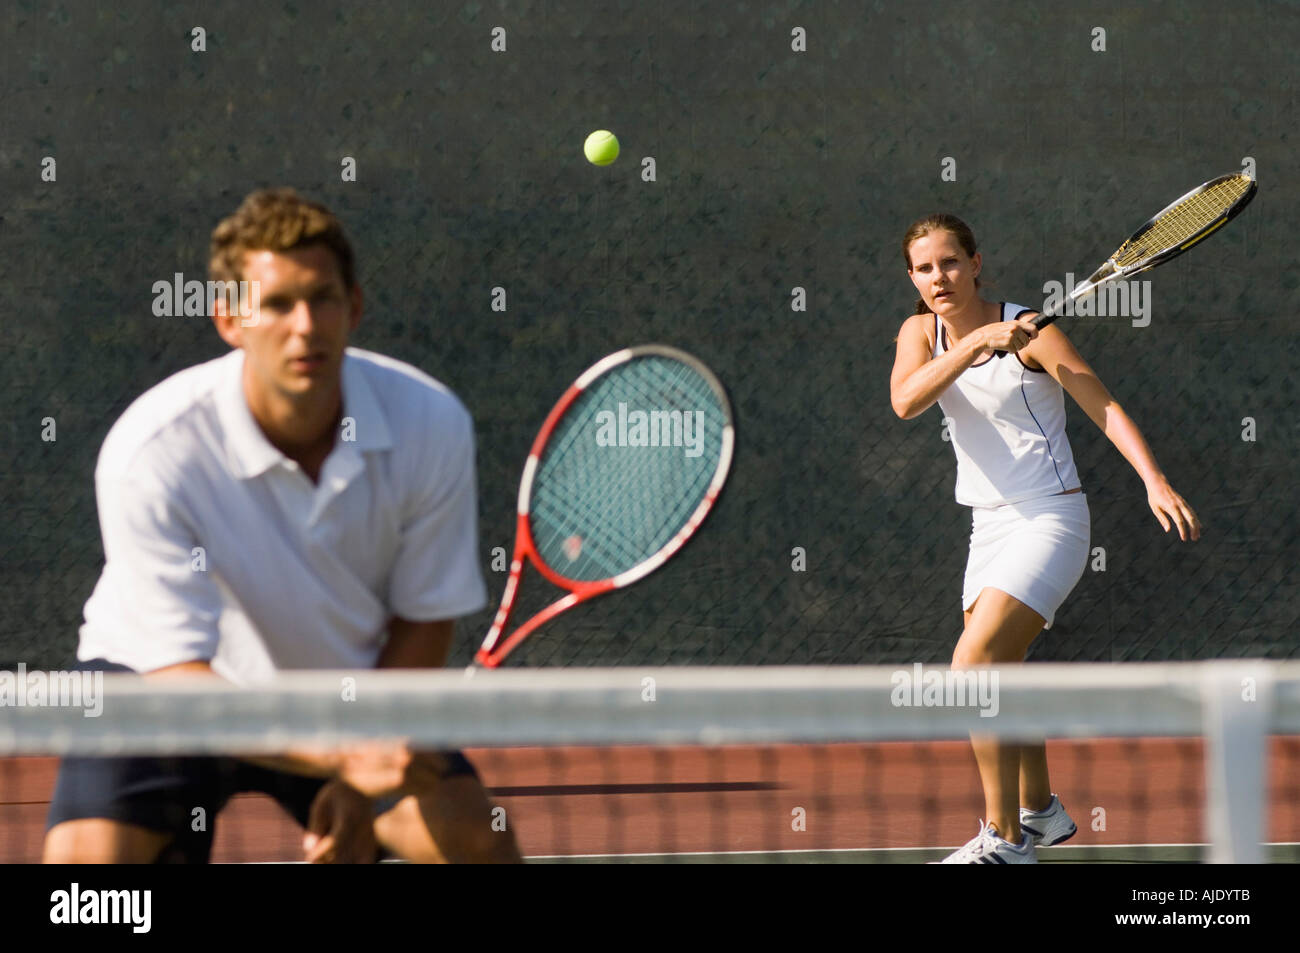 Mixed Doubles player hitting tennis ball, partner standing near net Stock  Photo - Alamy